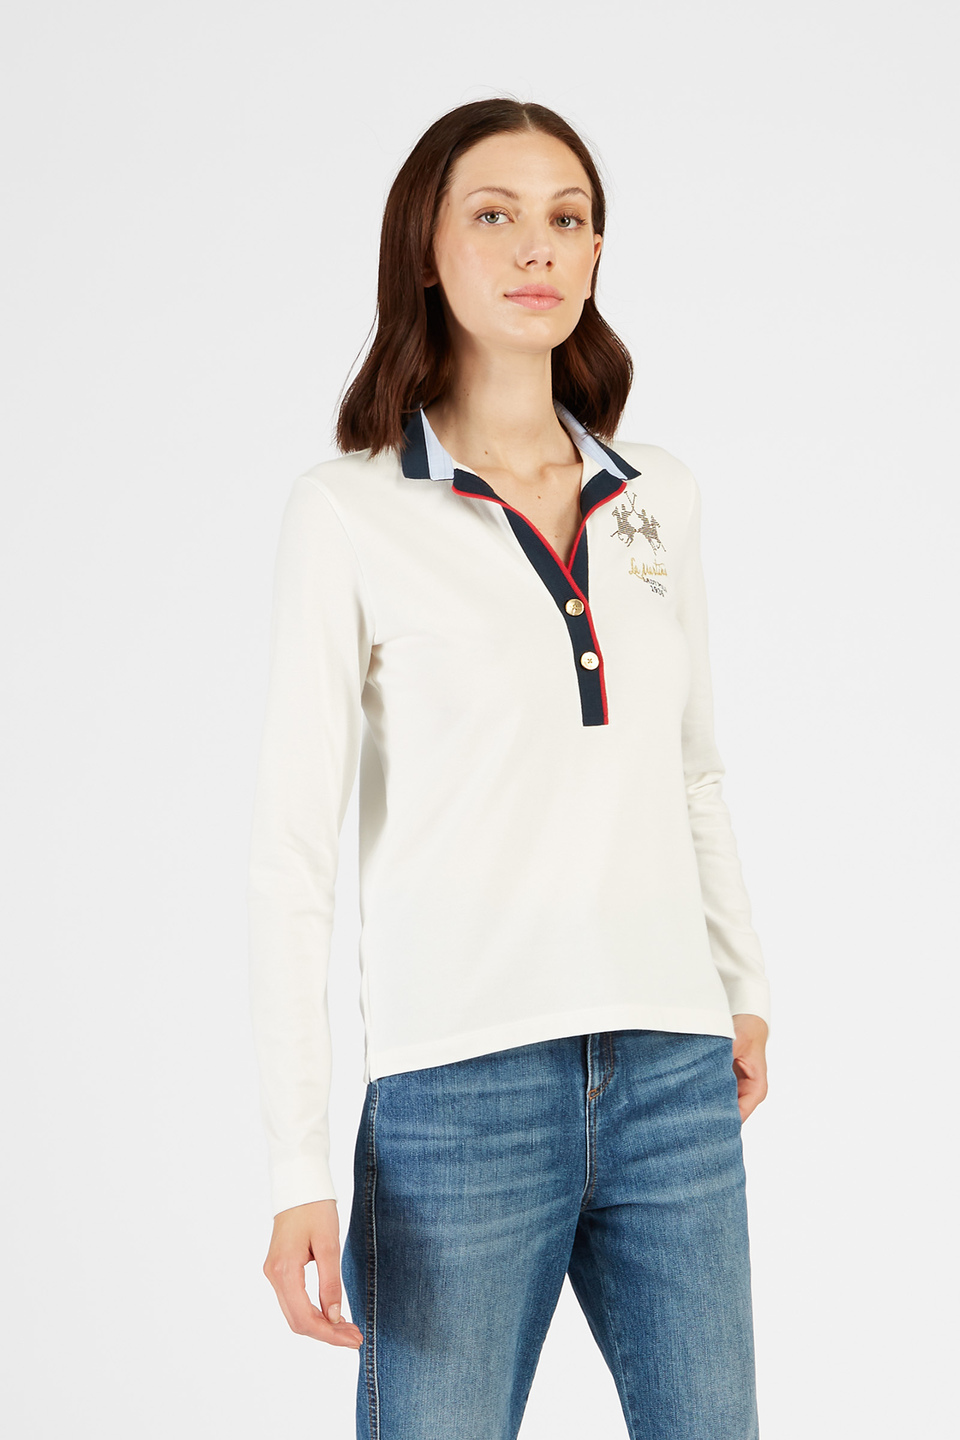 Damen Langarmshirt aus regular fit elastischer Baumwolle | La Martina - Official Online Shop